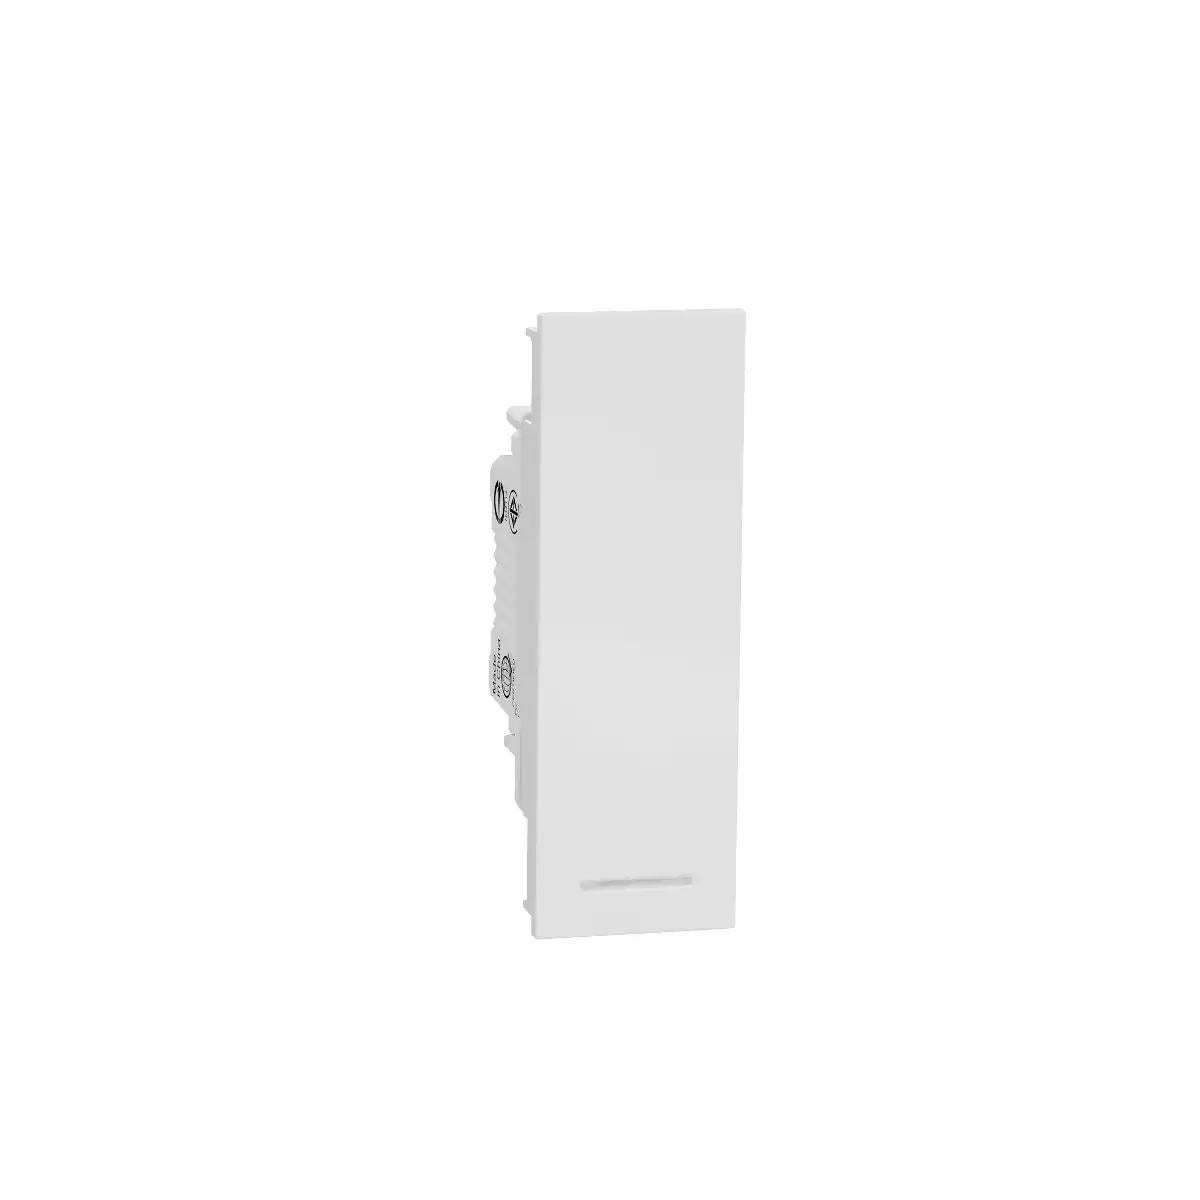 Switch, Avataron A , 16AX 250V, 2 Way, S sized, White